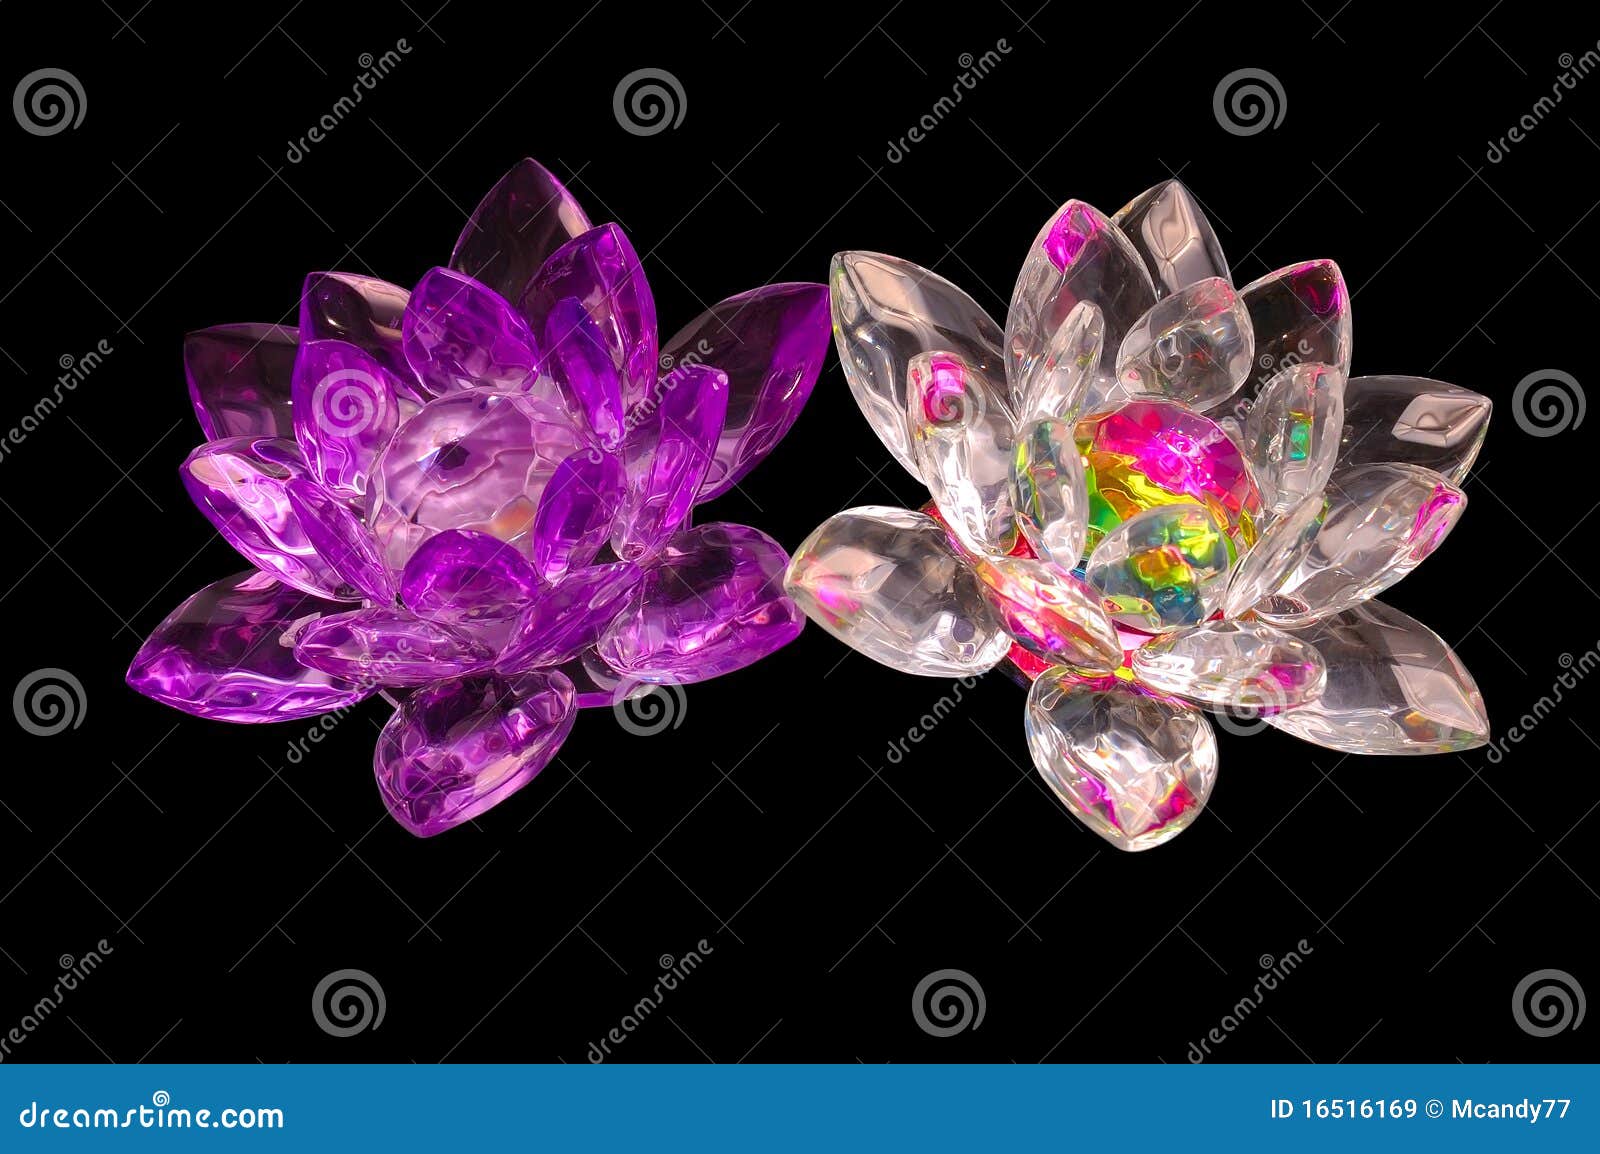 2 Crystal Flowers on a Black Stock Image - Image of jewel, amethyst:  16516169